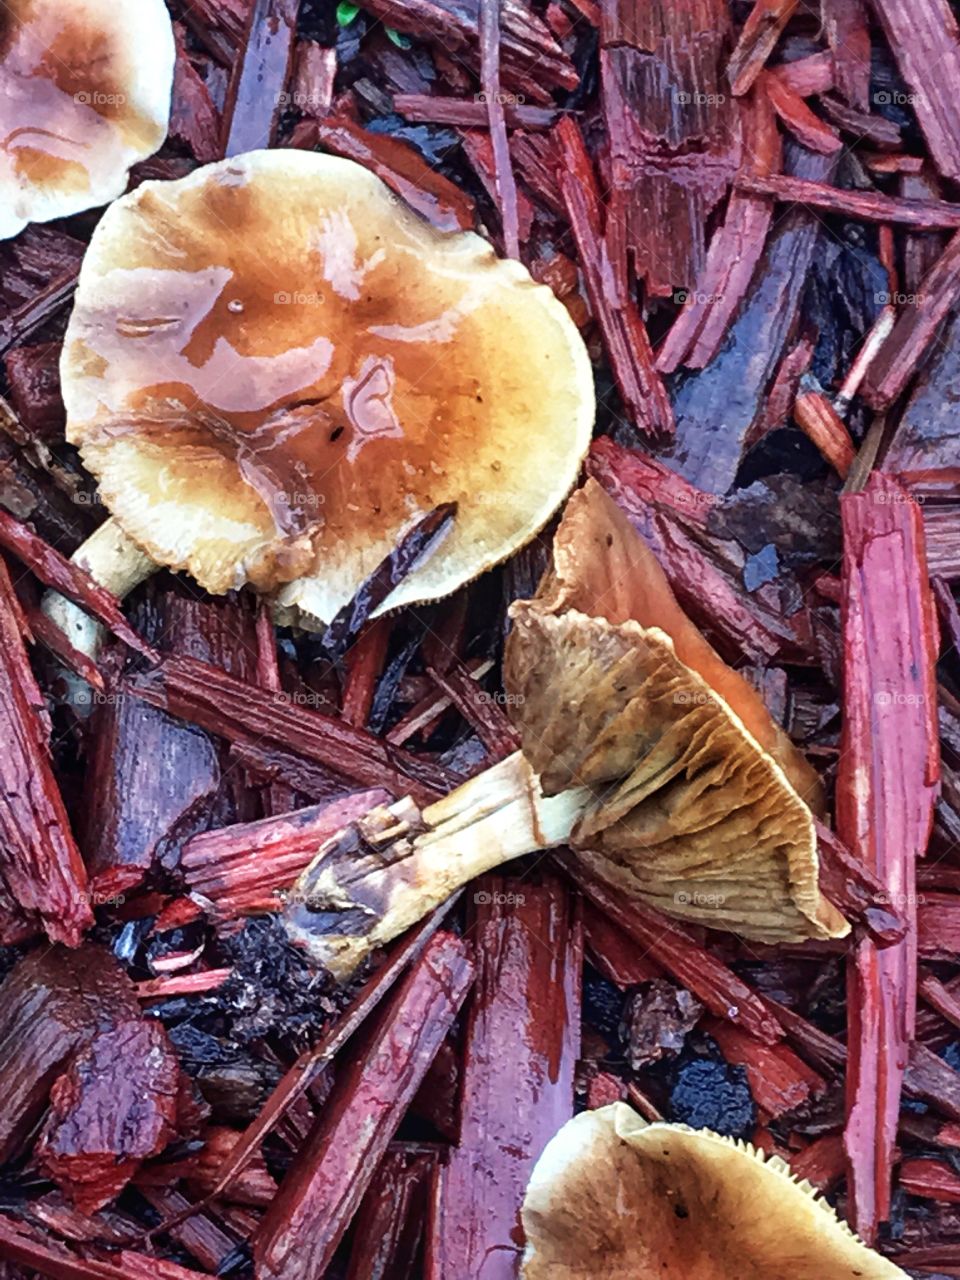 Mushrooms in a rainy day